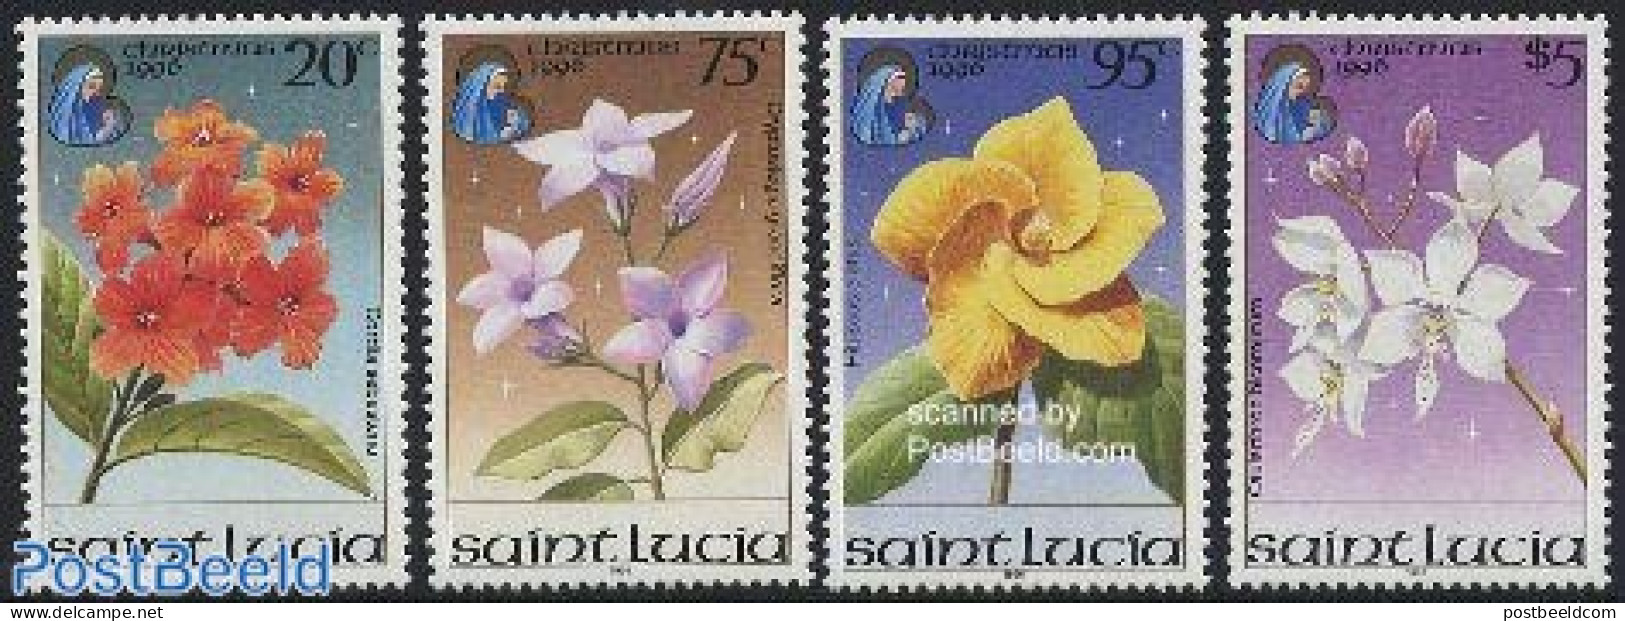 Saint Lucia 1996 Christmas, Flowers 4v, Mint NH, Nature - Flowers & Plants - St.Lucia (1979-...)